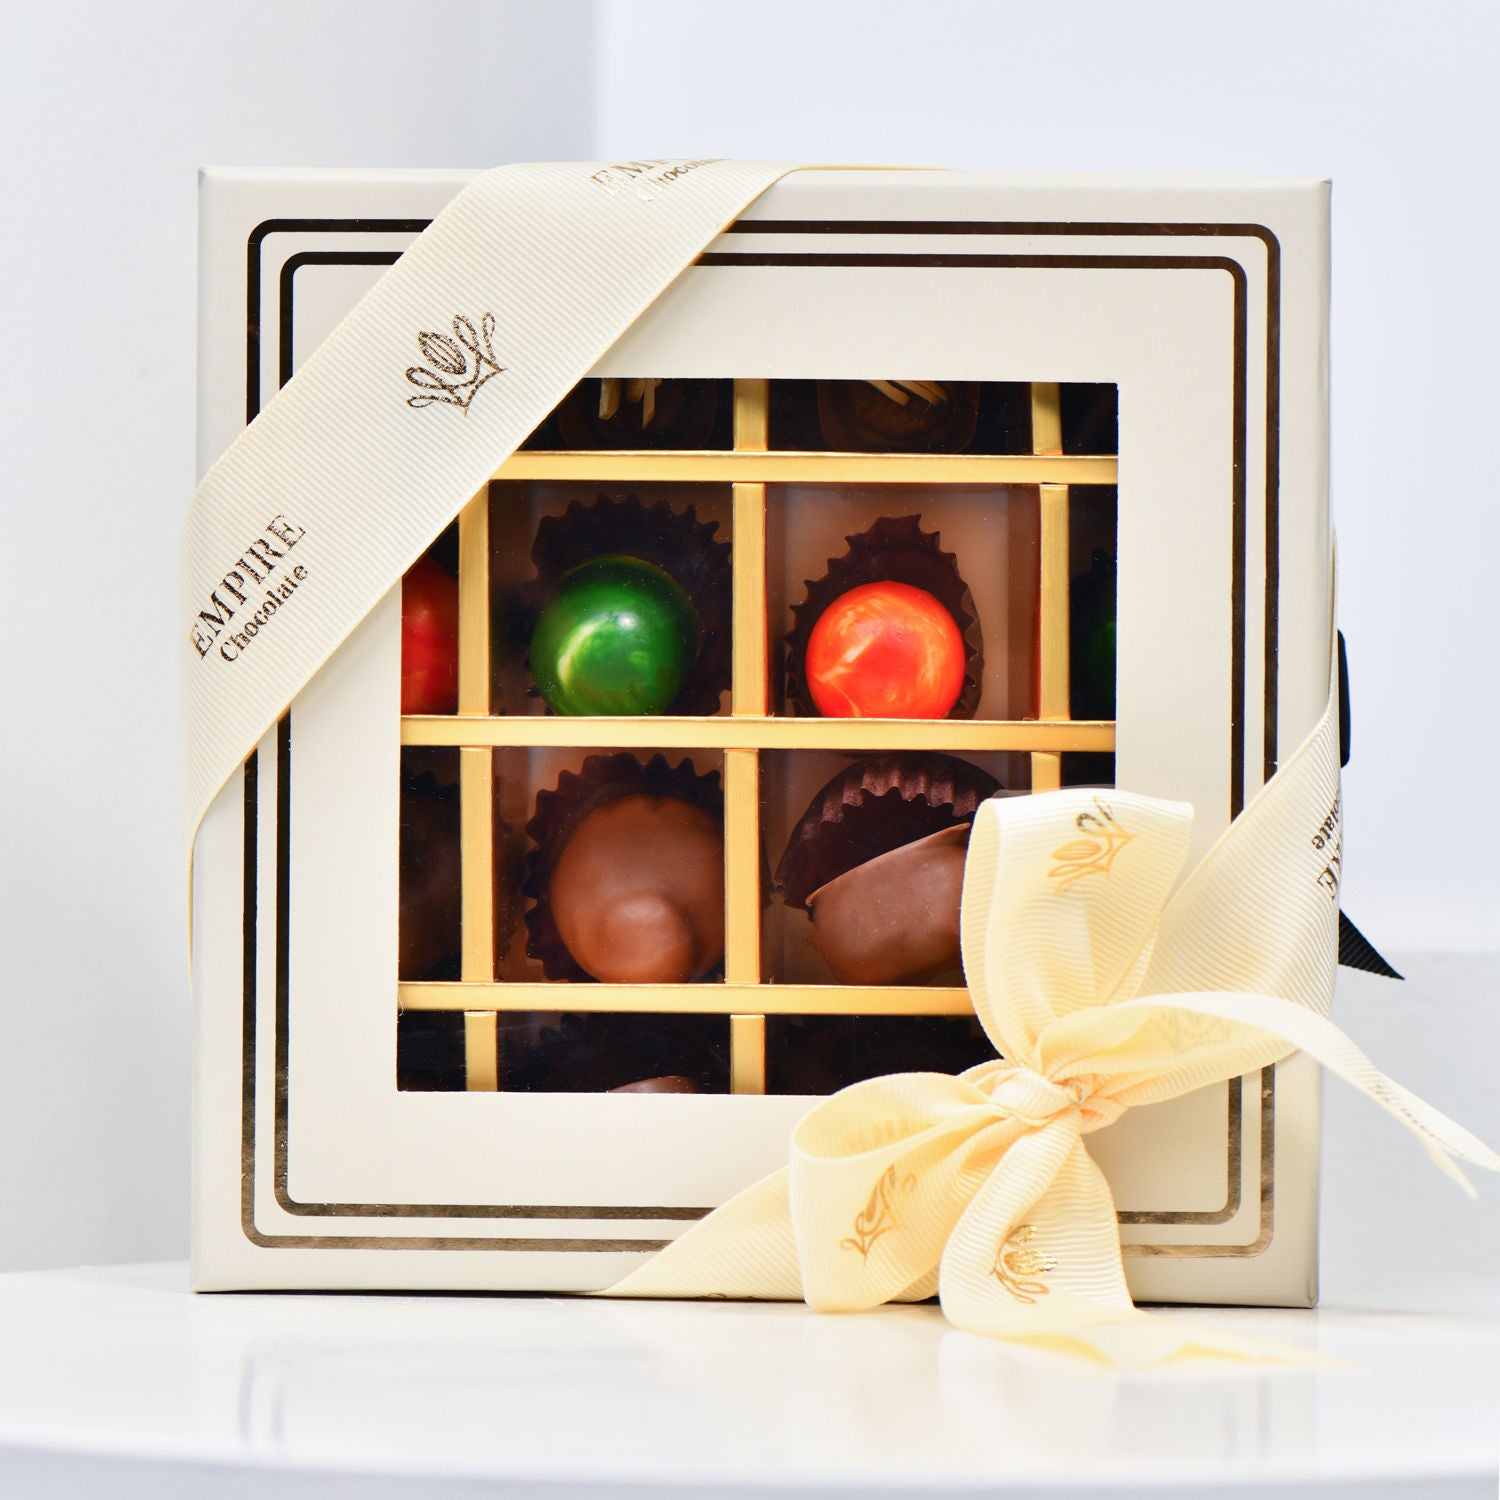 Empire Assorted Chocolate Box 16 Pieces